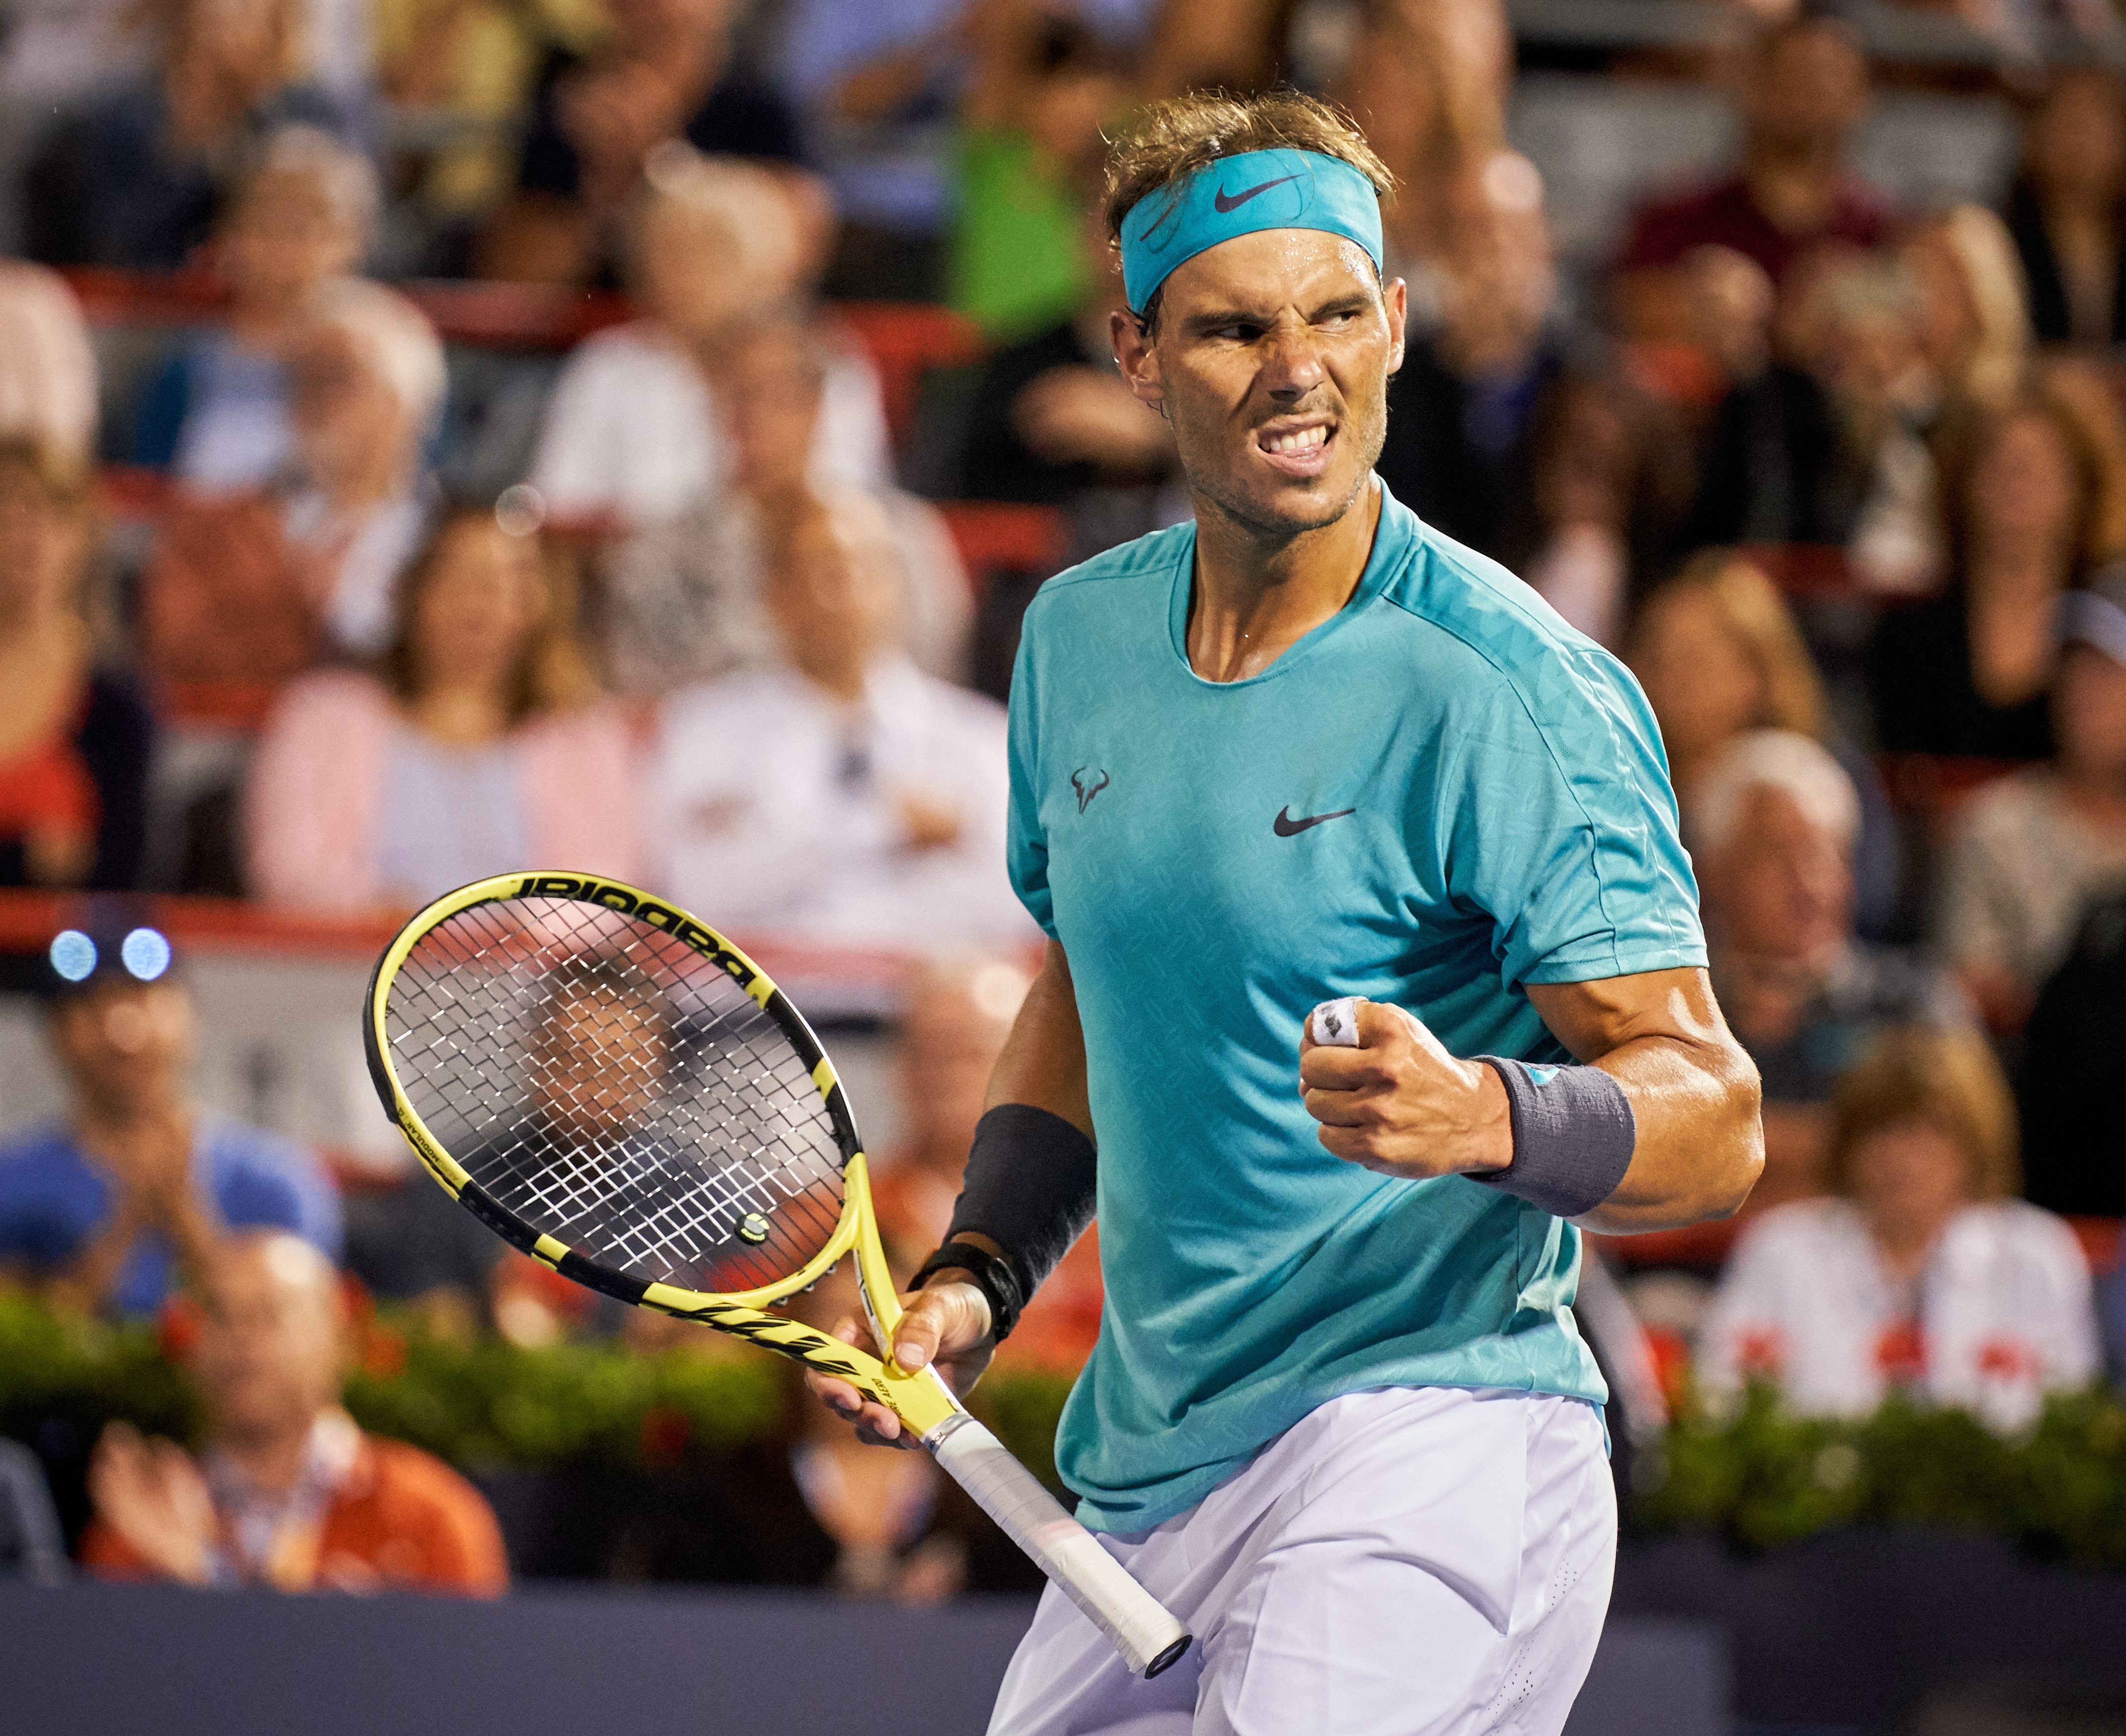 Rafael Nadal, Daniil Medvedev to face off in Rogers Cup final Globalnews.ca